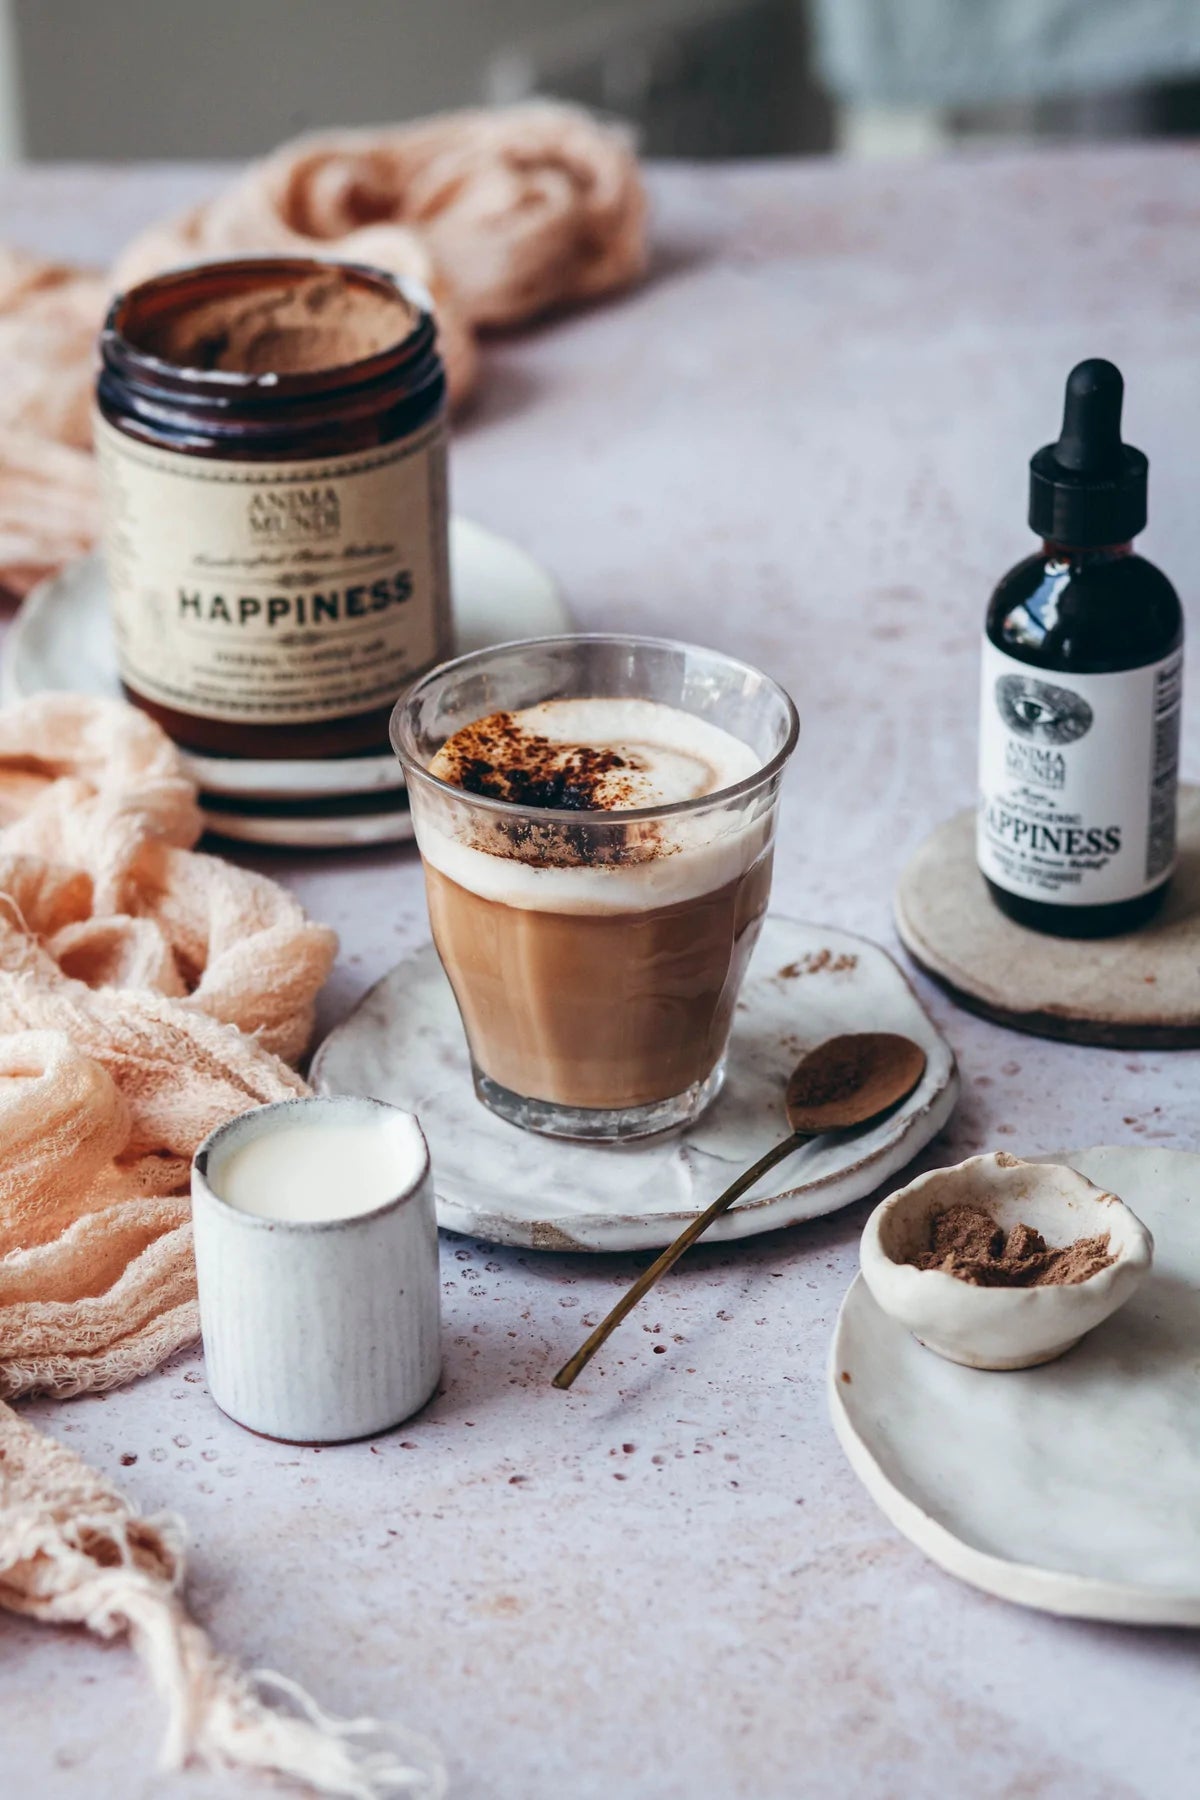 HAPPINESS Powder: Herbal Coffee, Serotonin + Dopamine